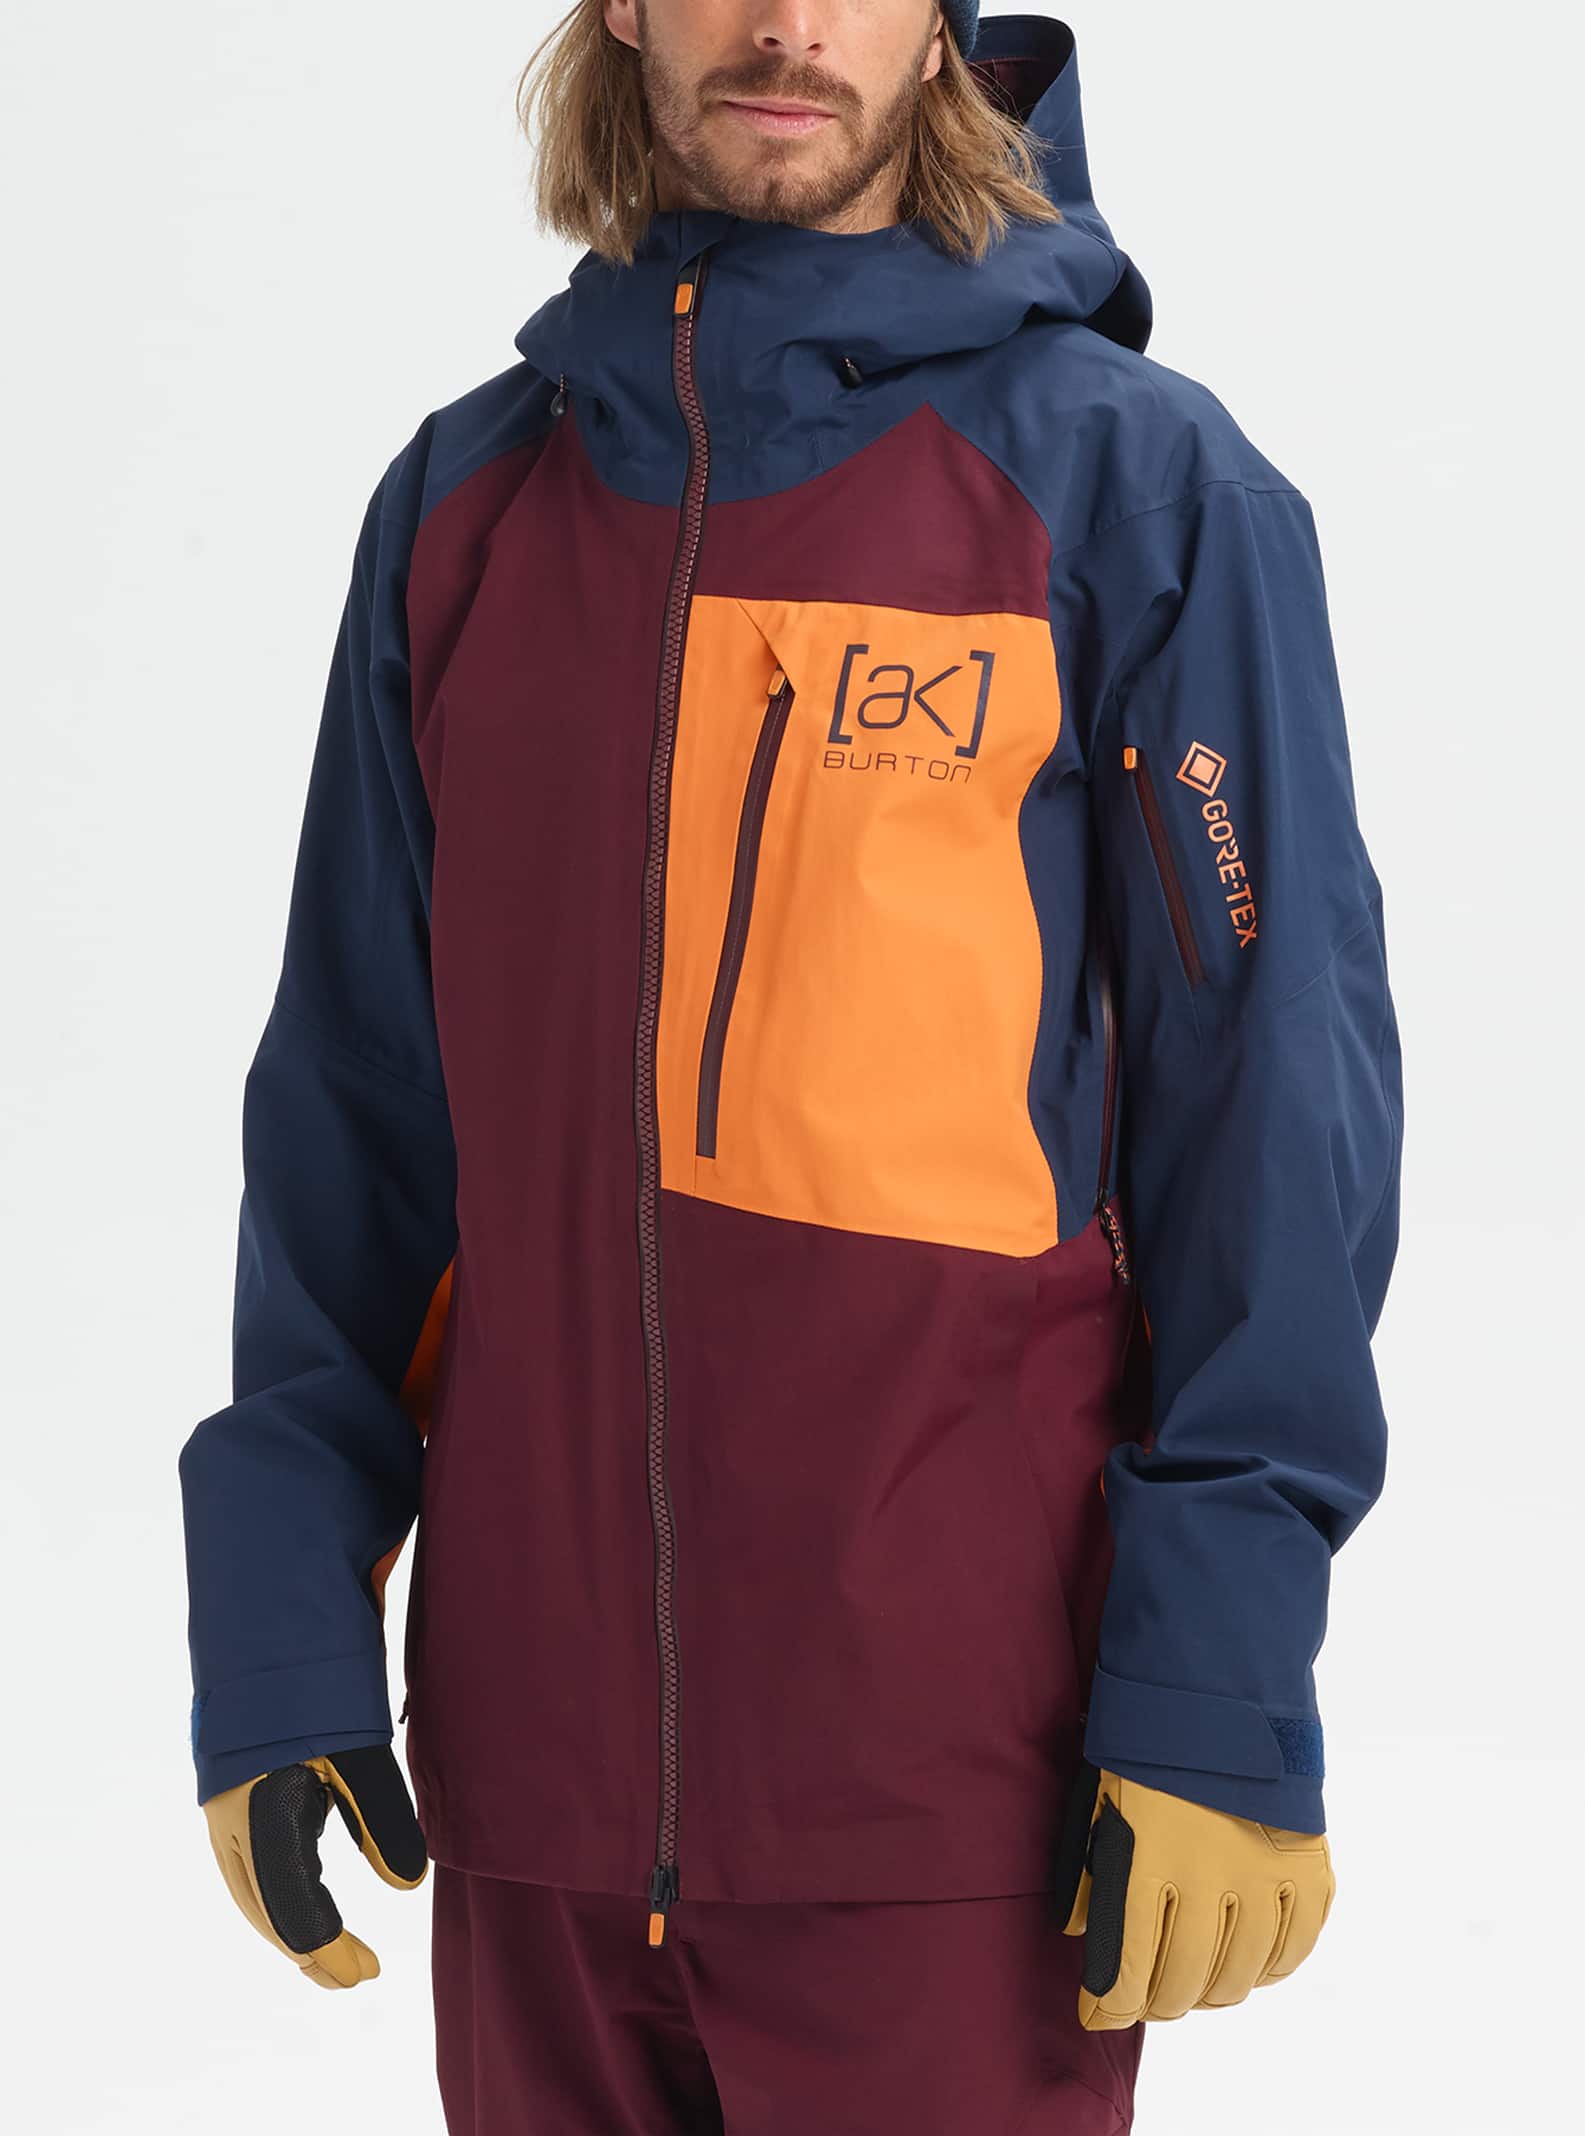 Men's Burton [ak] GORE‑TEX Cyclic Jacket | Burton.com Winter 2020 JP